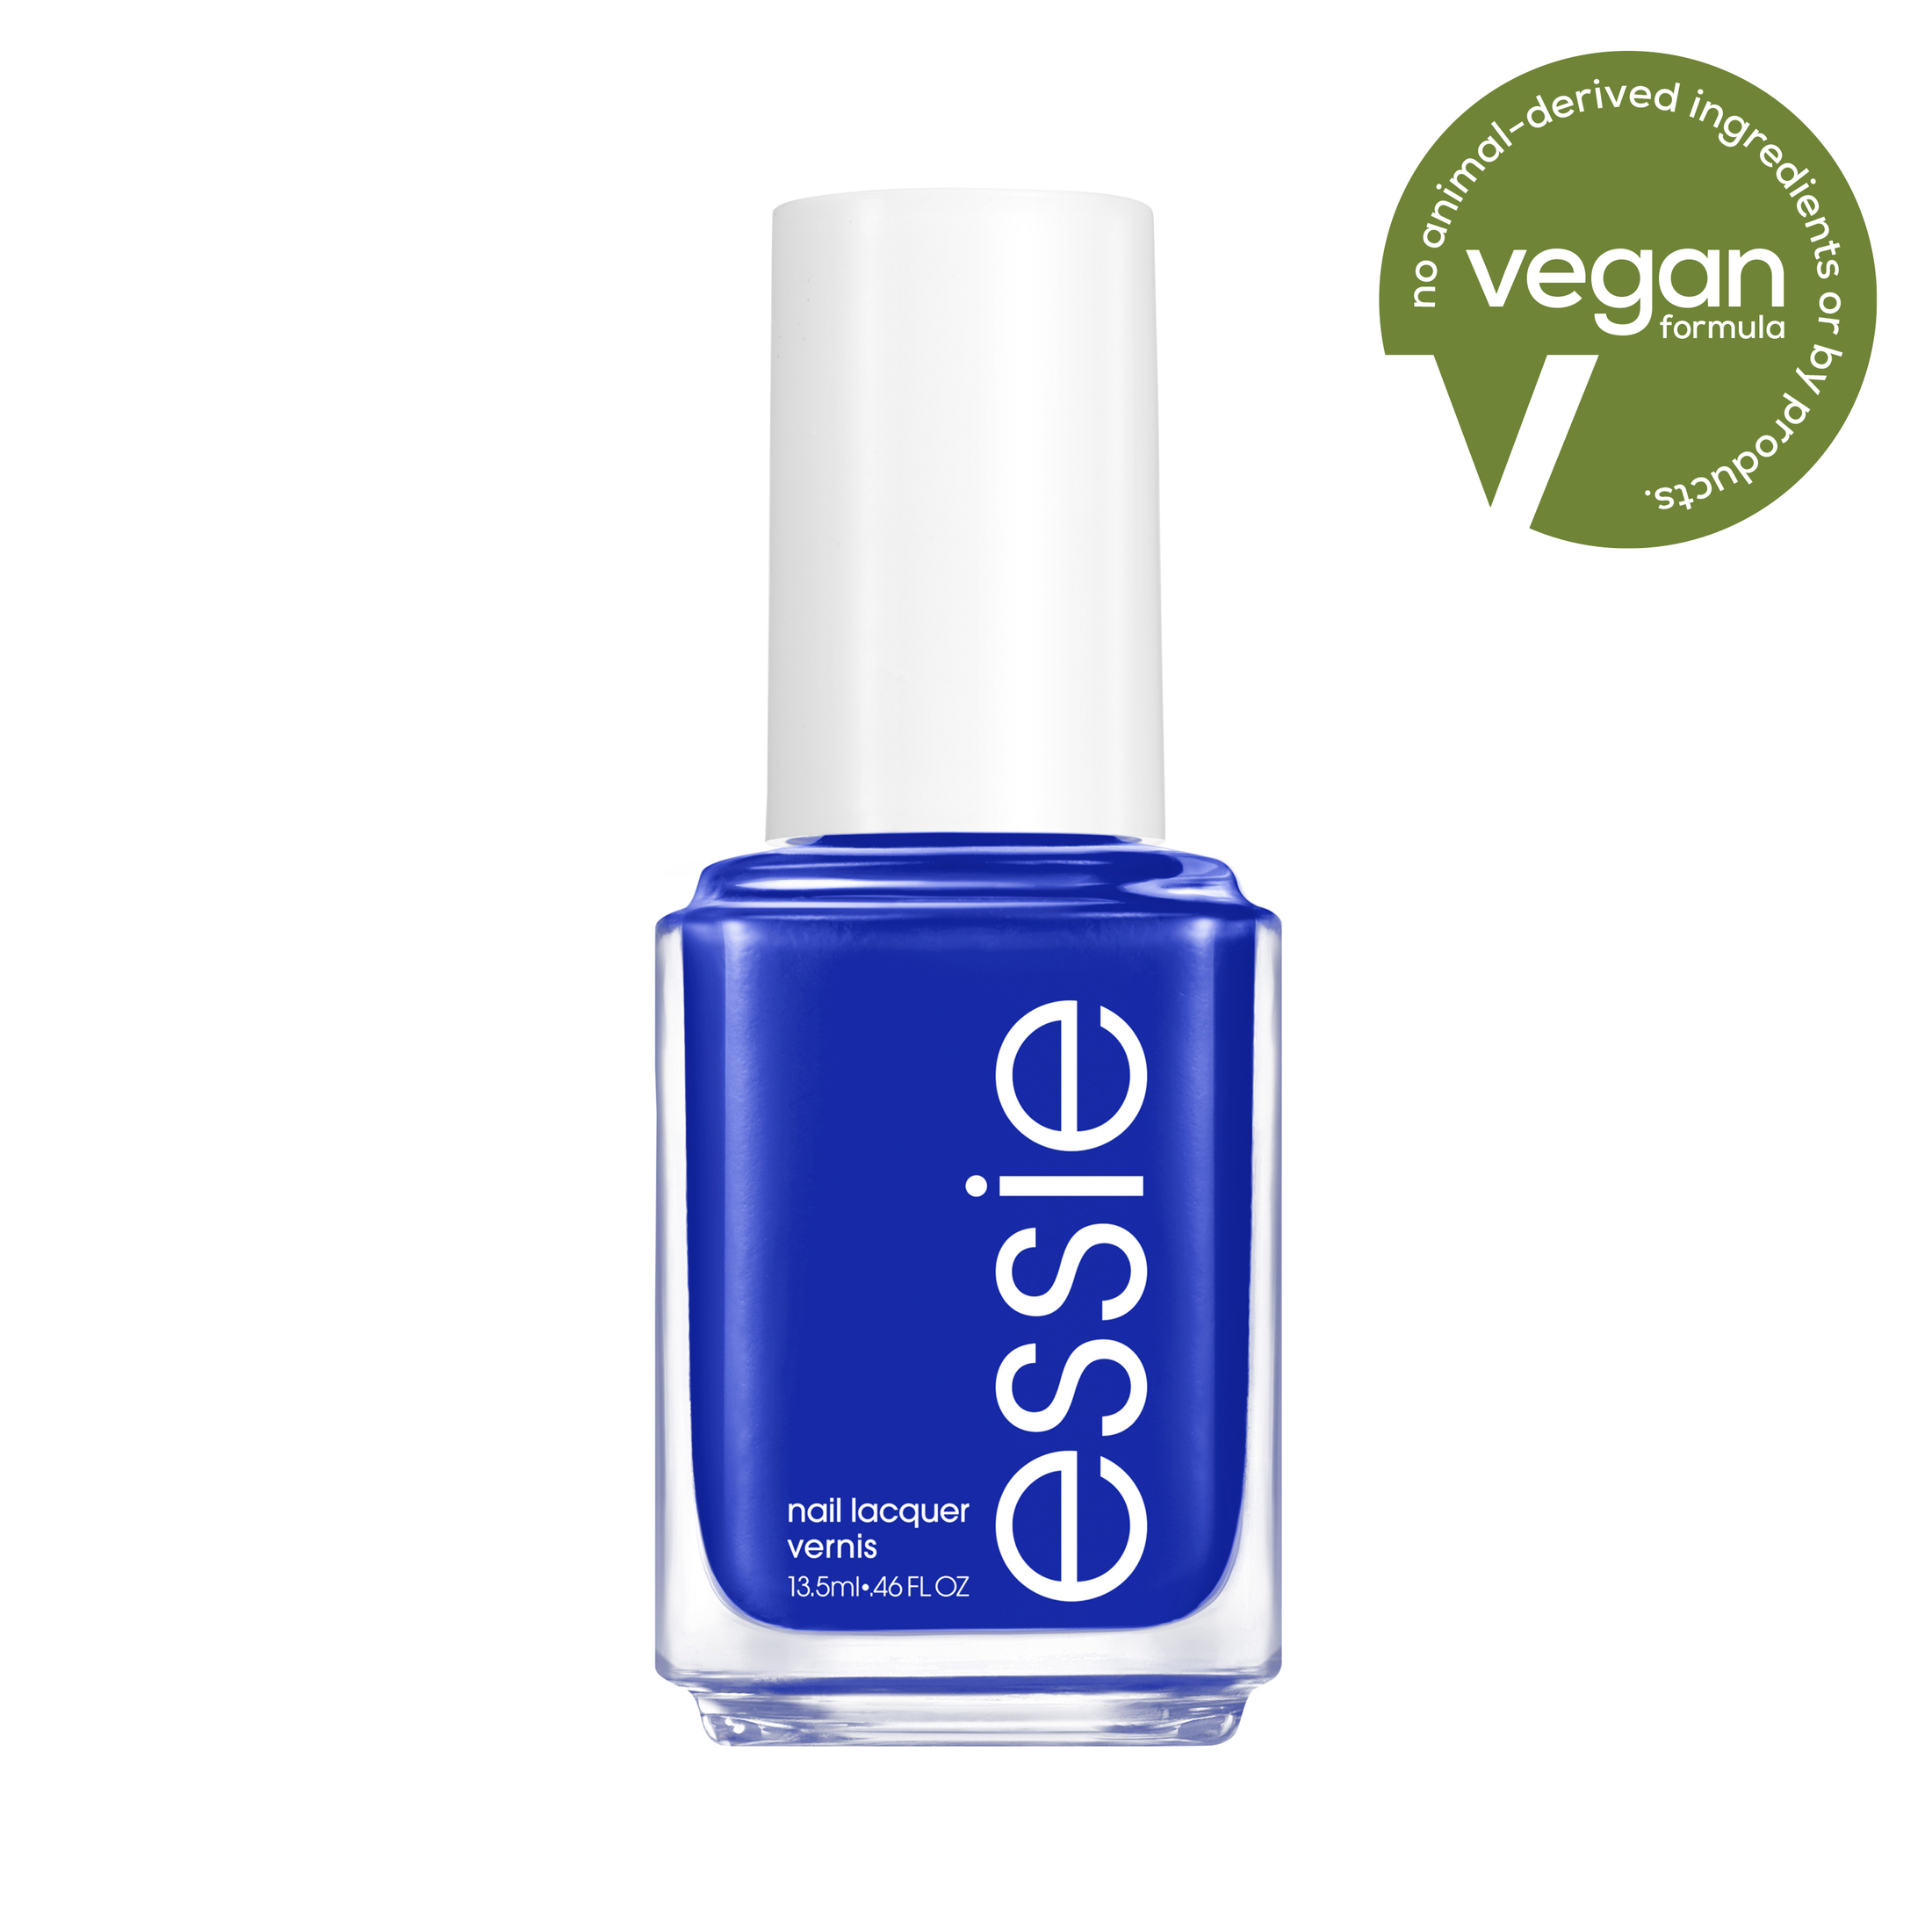 essie Salon Quality Nail Polish, Butler Please, Bright Blue, 0.46 fl oz Bottle - image 1 of 11